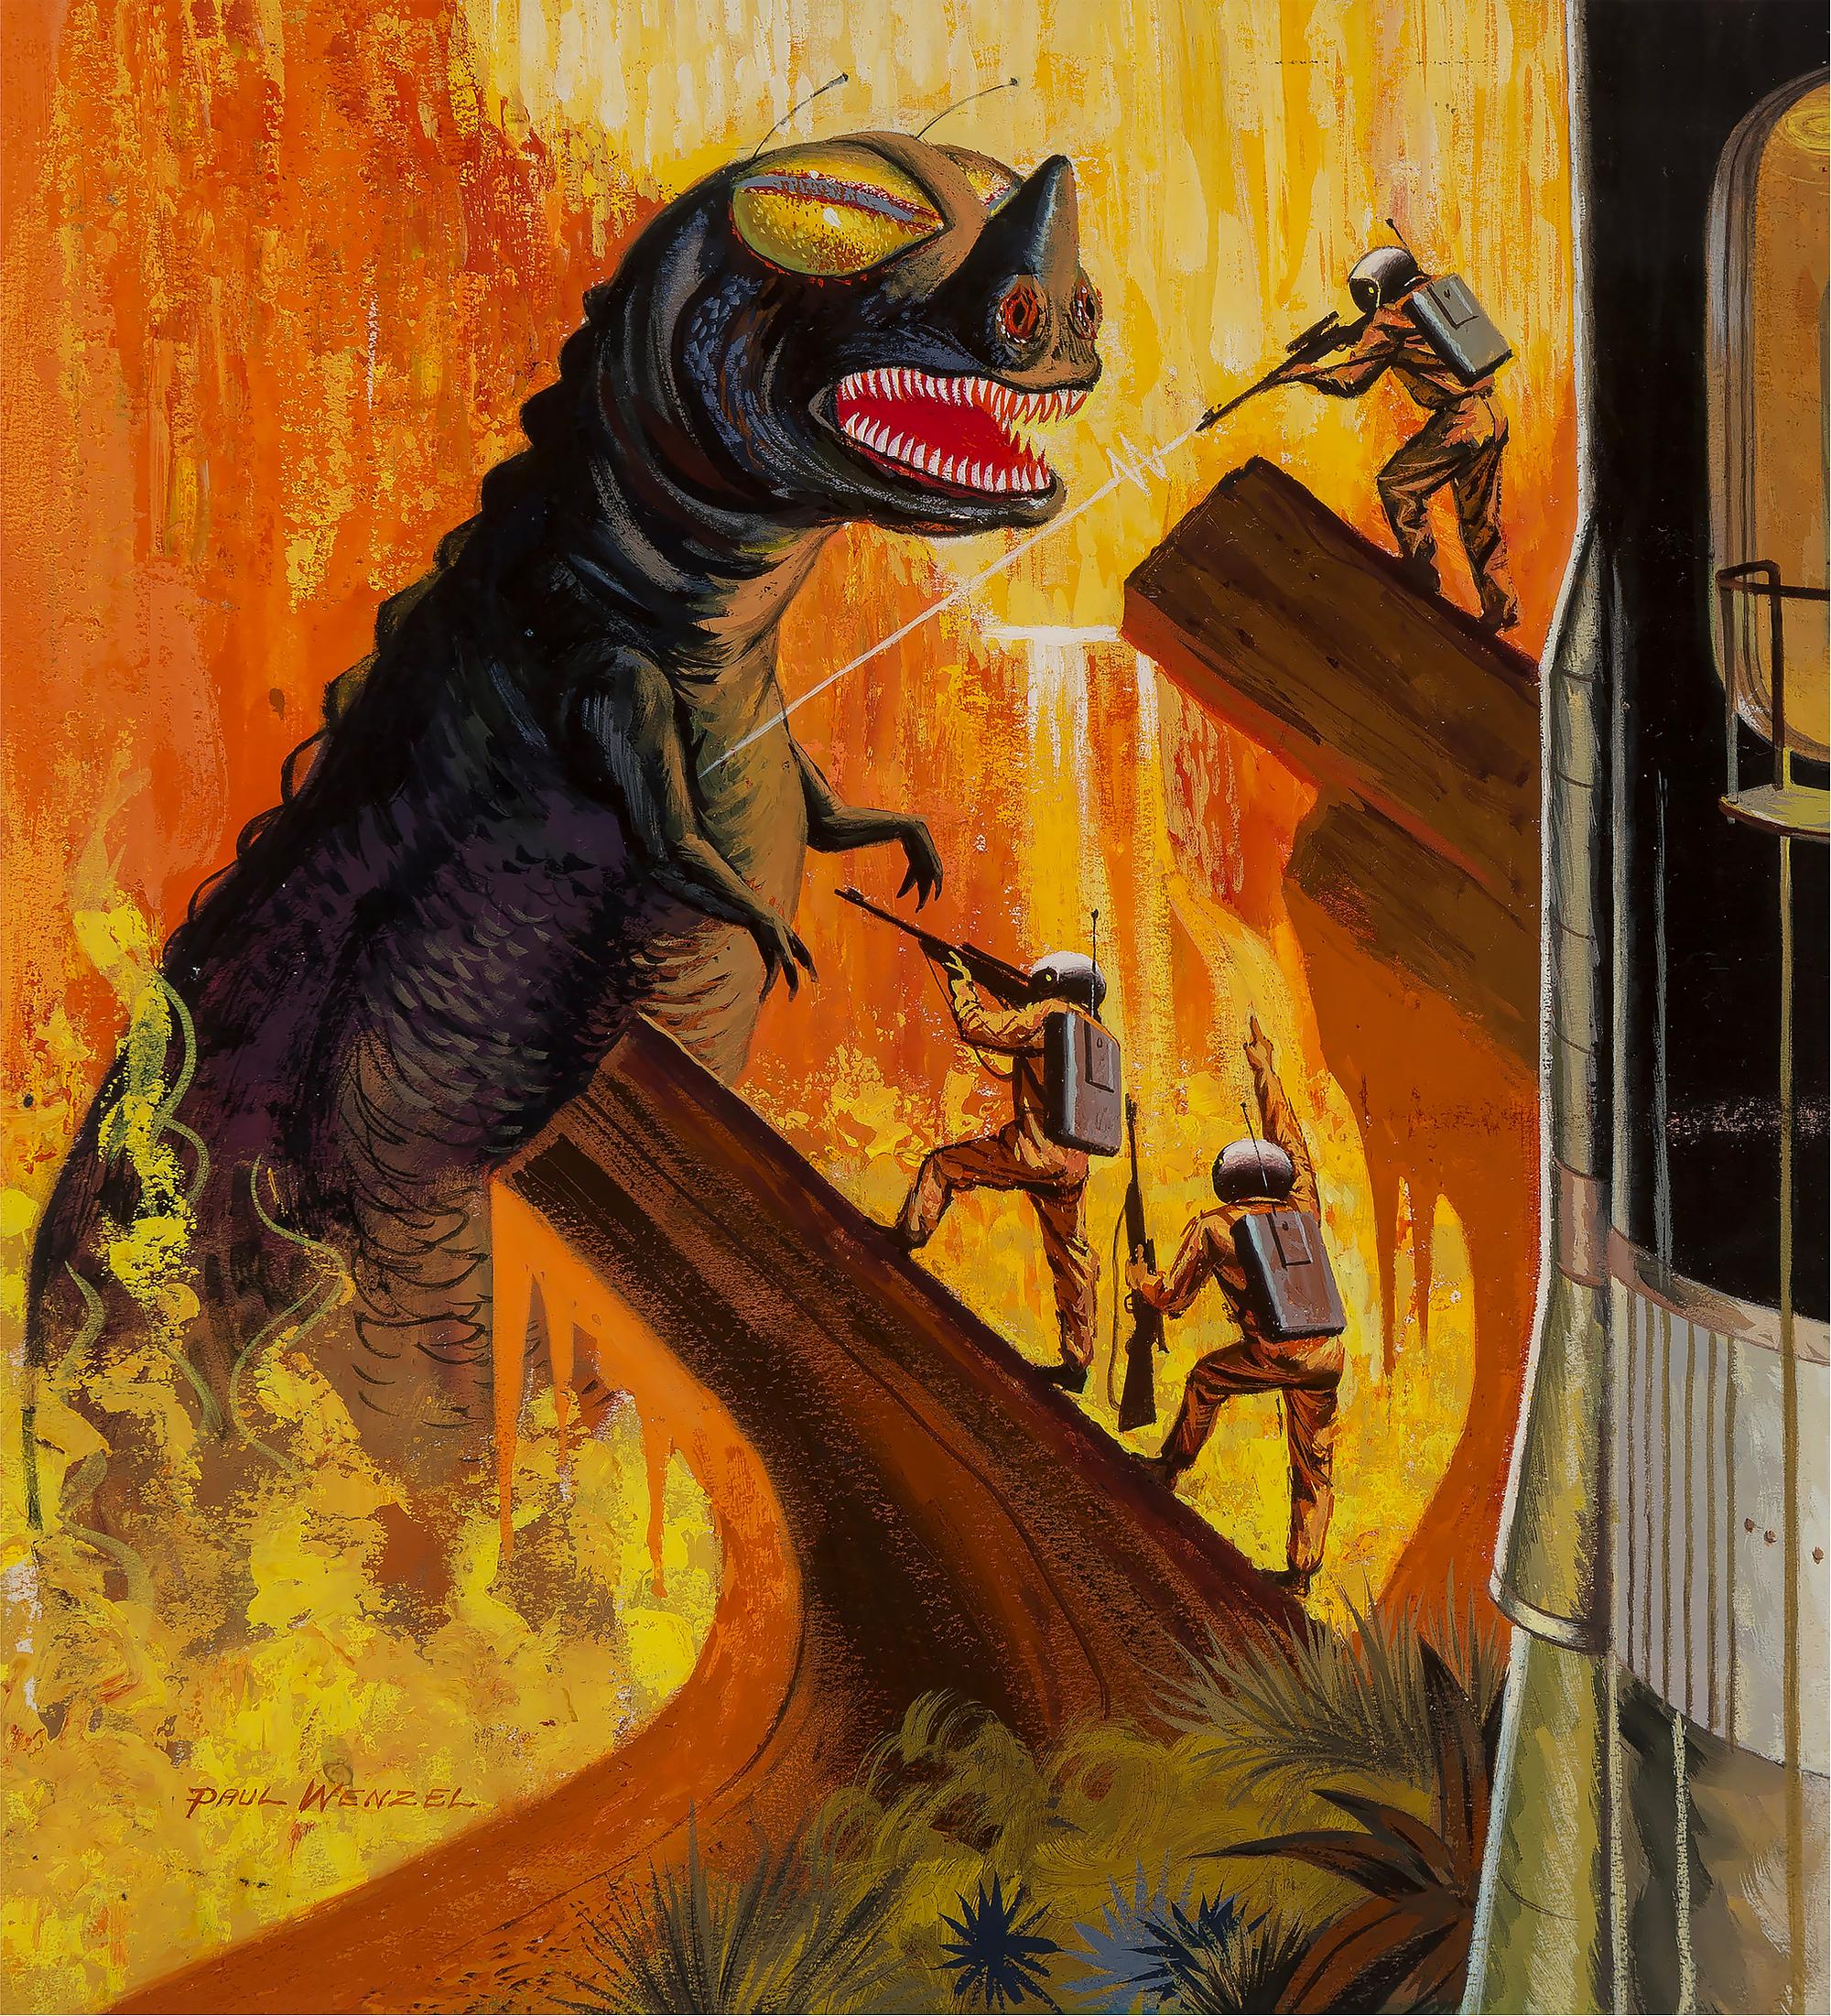 Paul Wenzel Animal Painting - Godzilla like Dinosaur Monster, SciFi, Science Fiction Cover Illustration